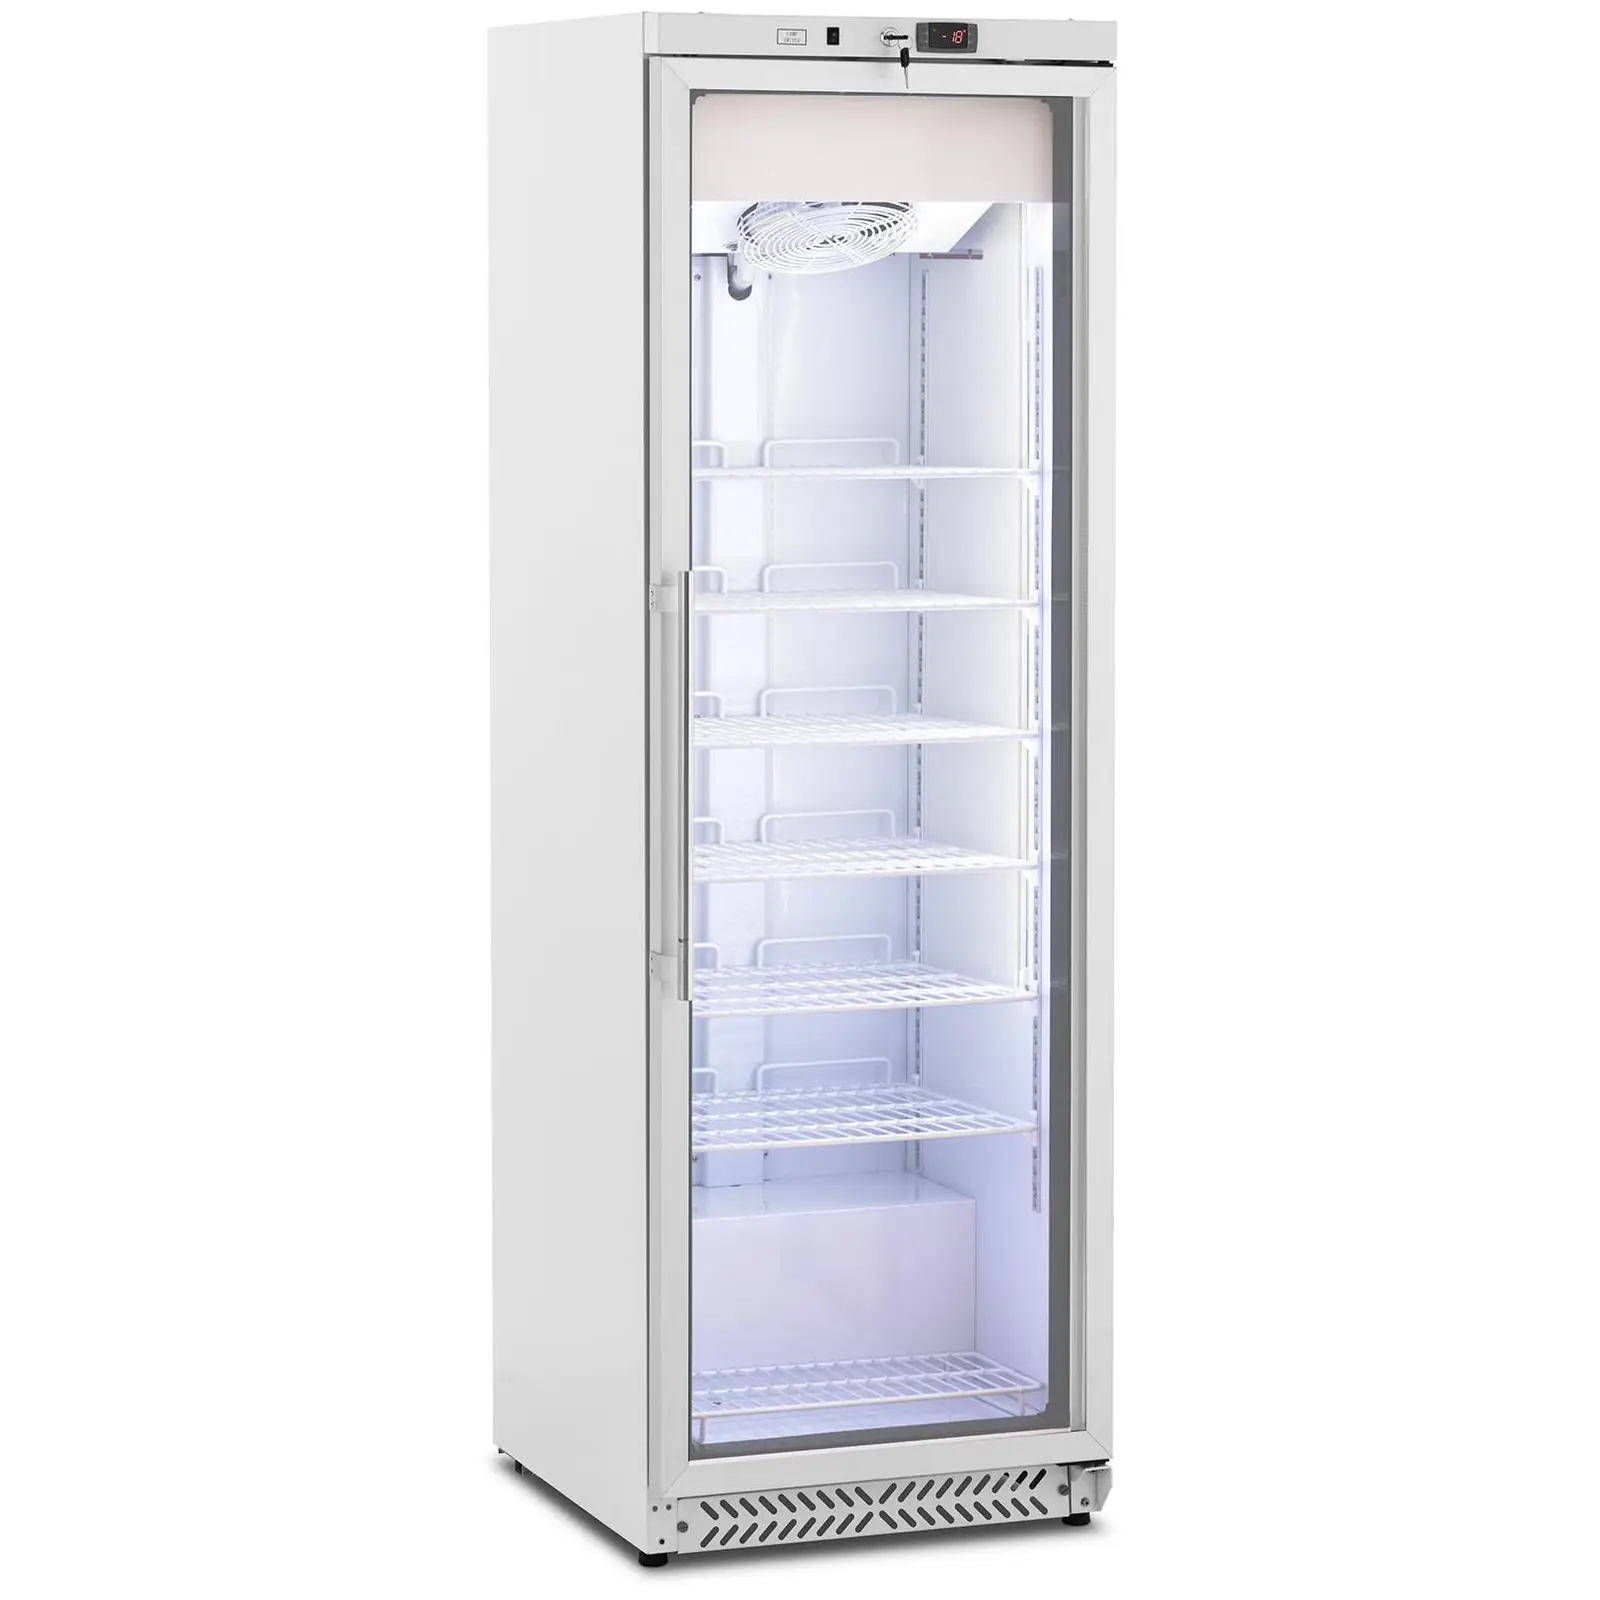 Arca congeladora de gaveta - 380 l - Royal Catering - porta de vidro - branco - refrigerante R290